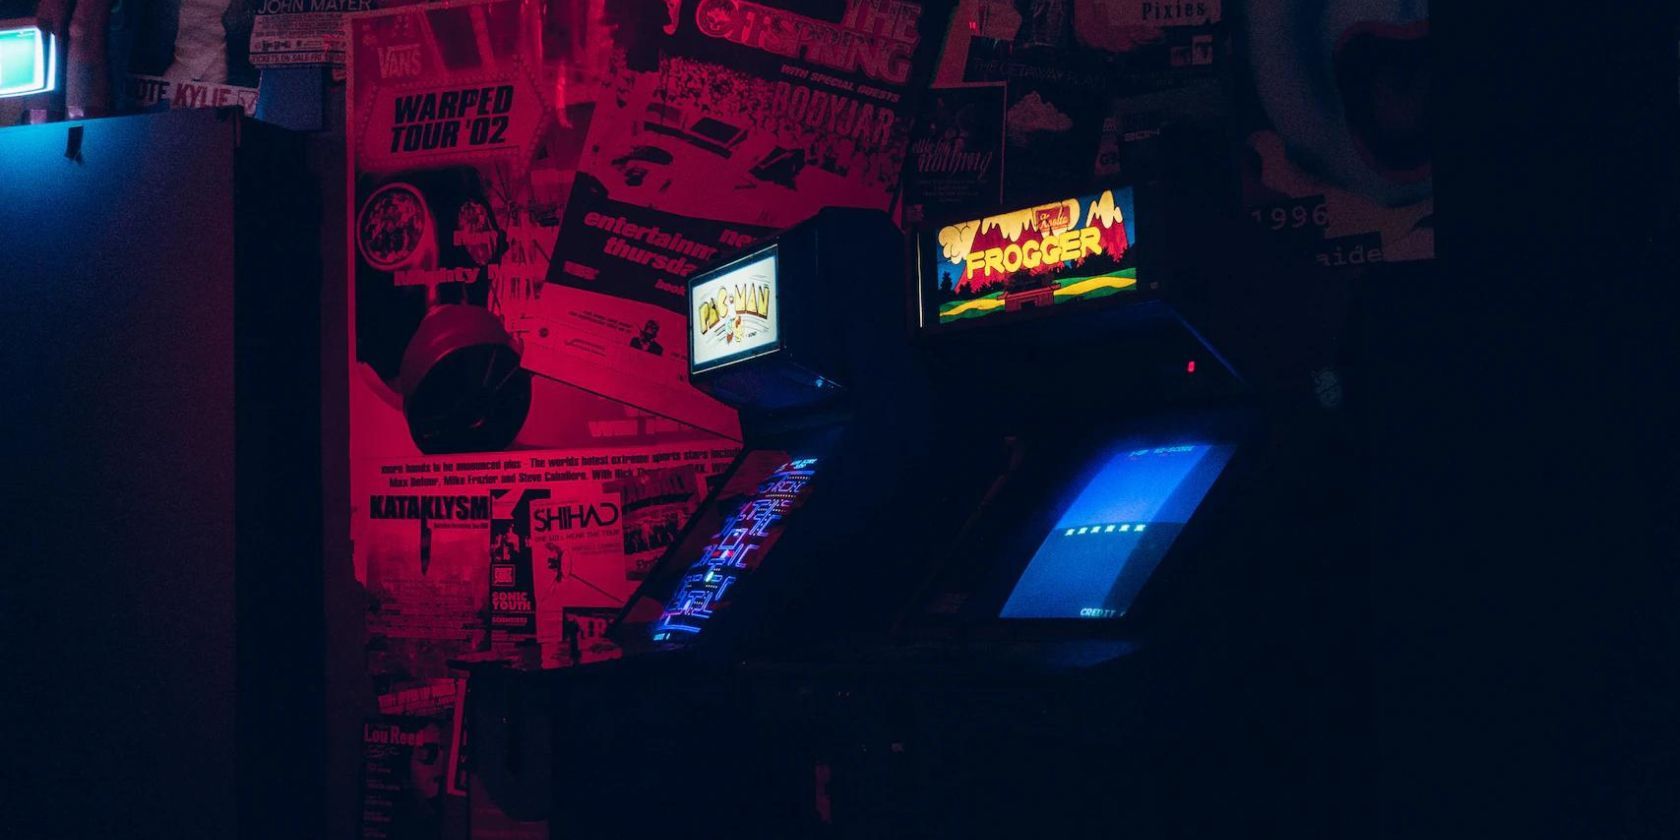 Dimly lit shot of two retro arcade games